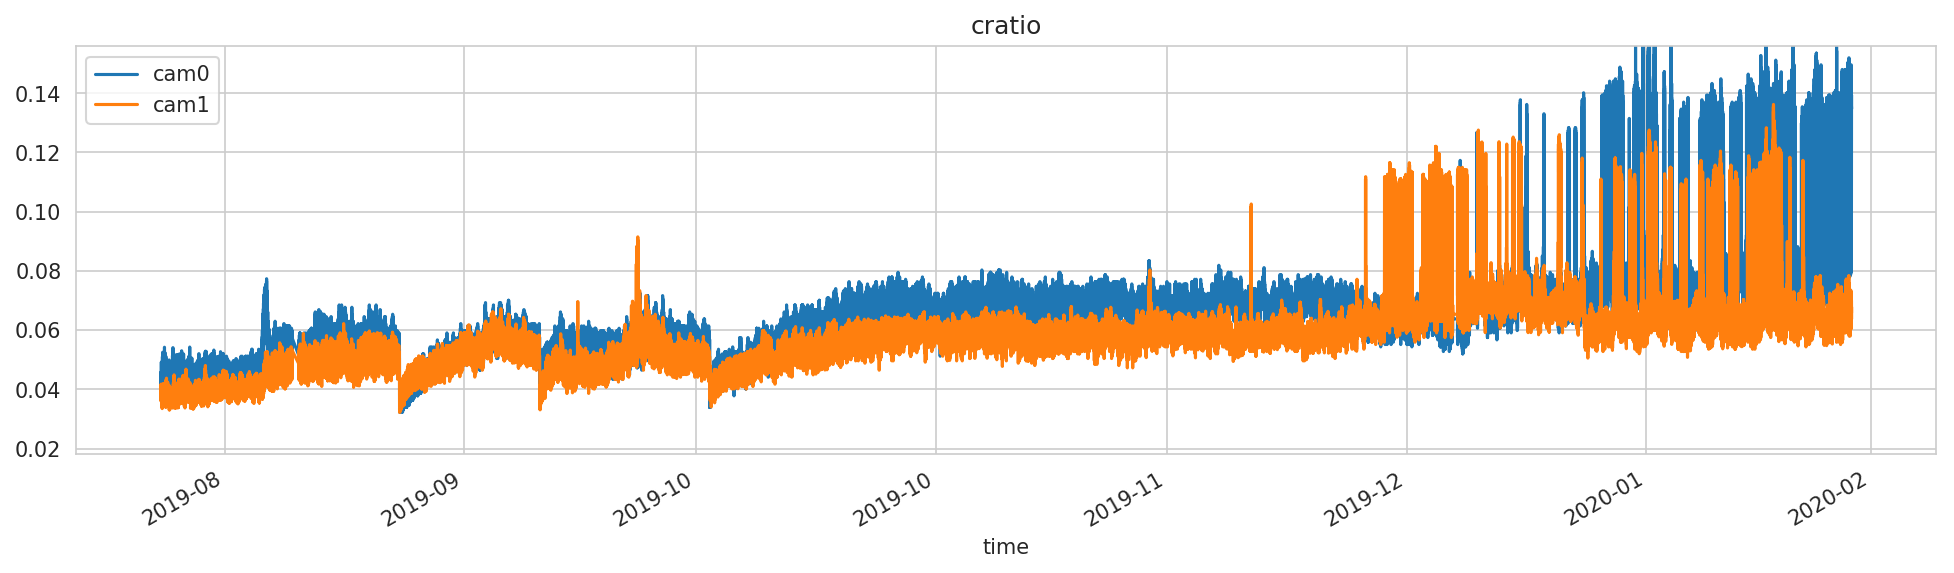 cratio_metrics live preview